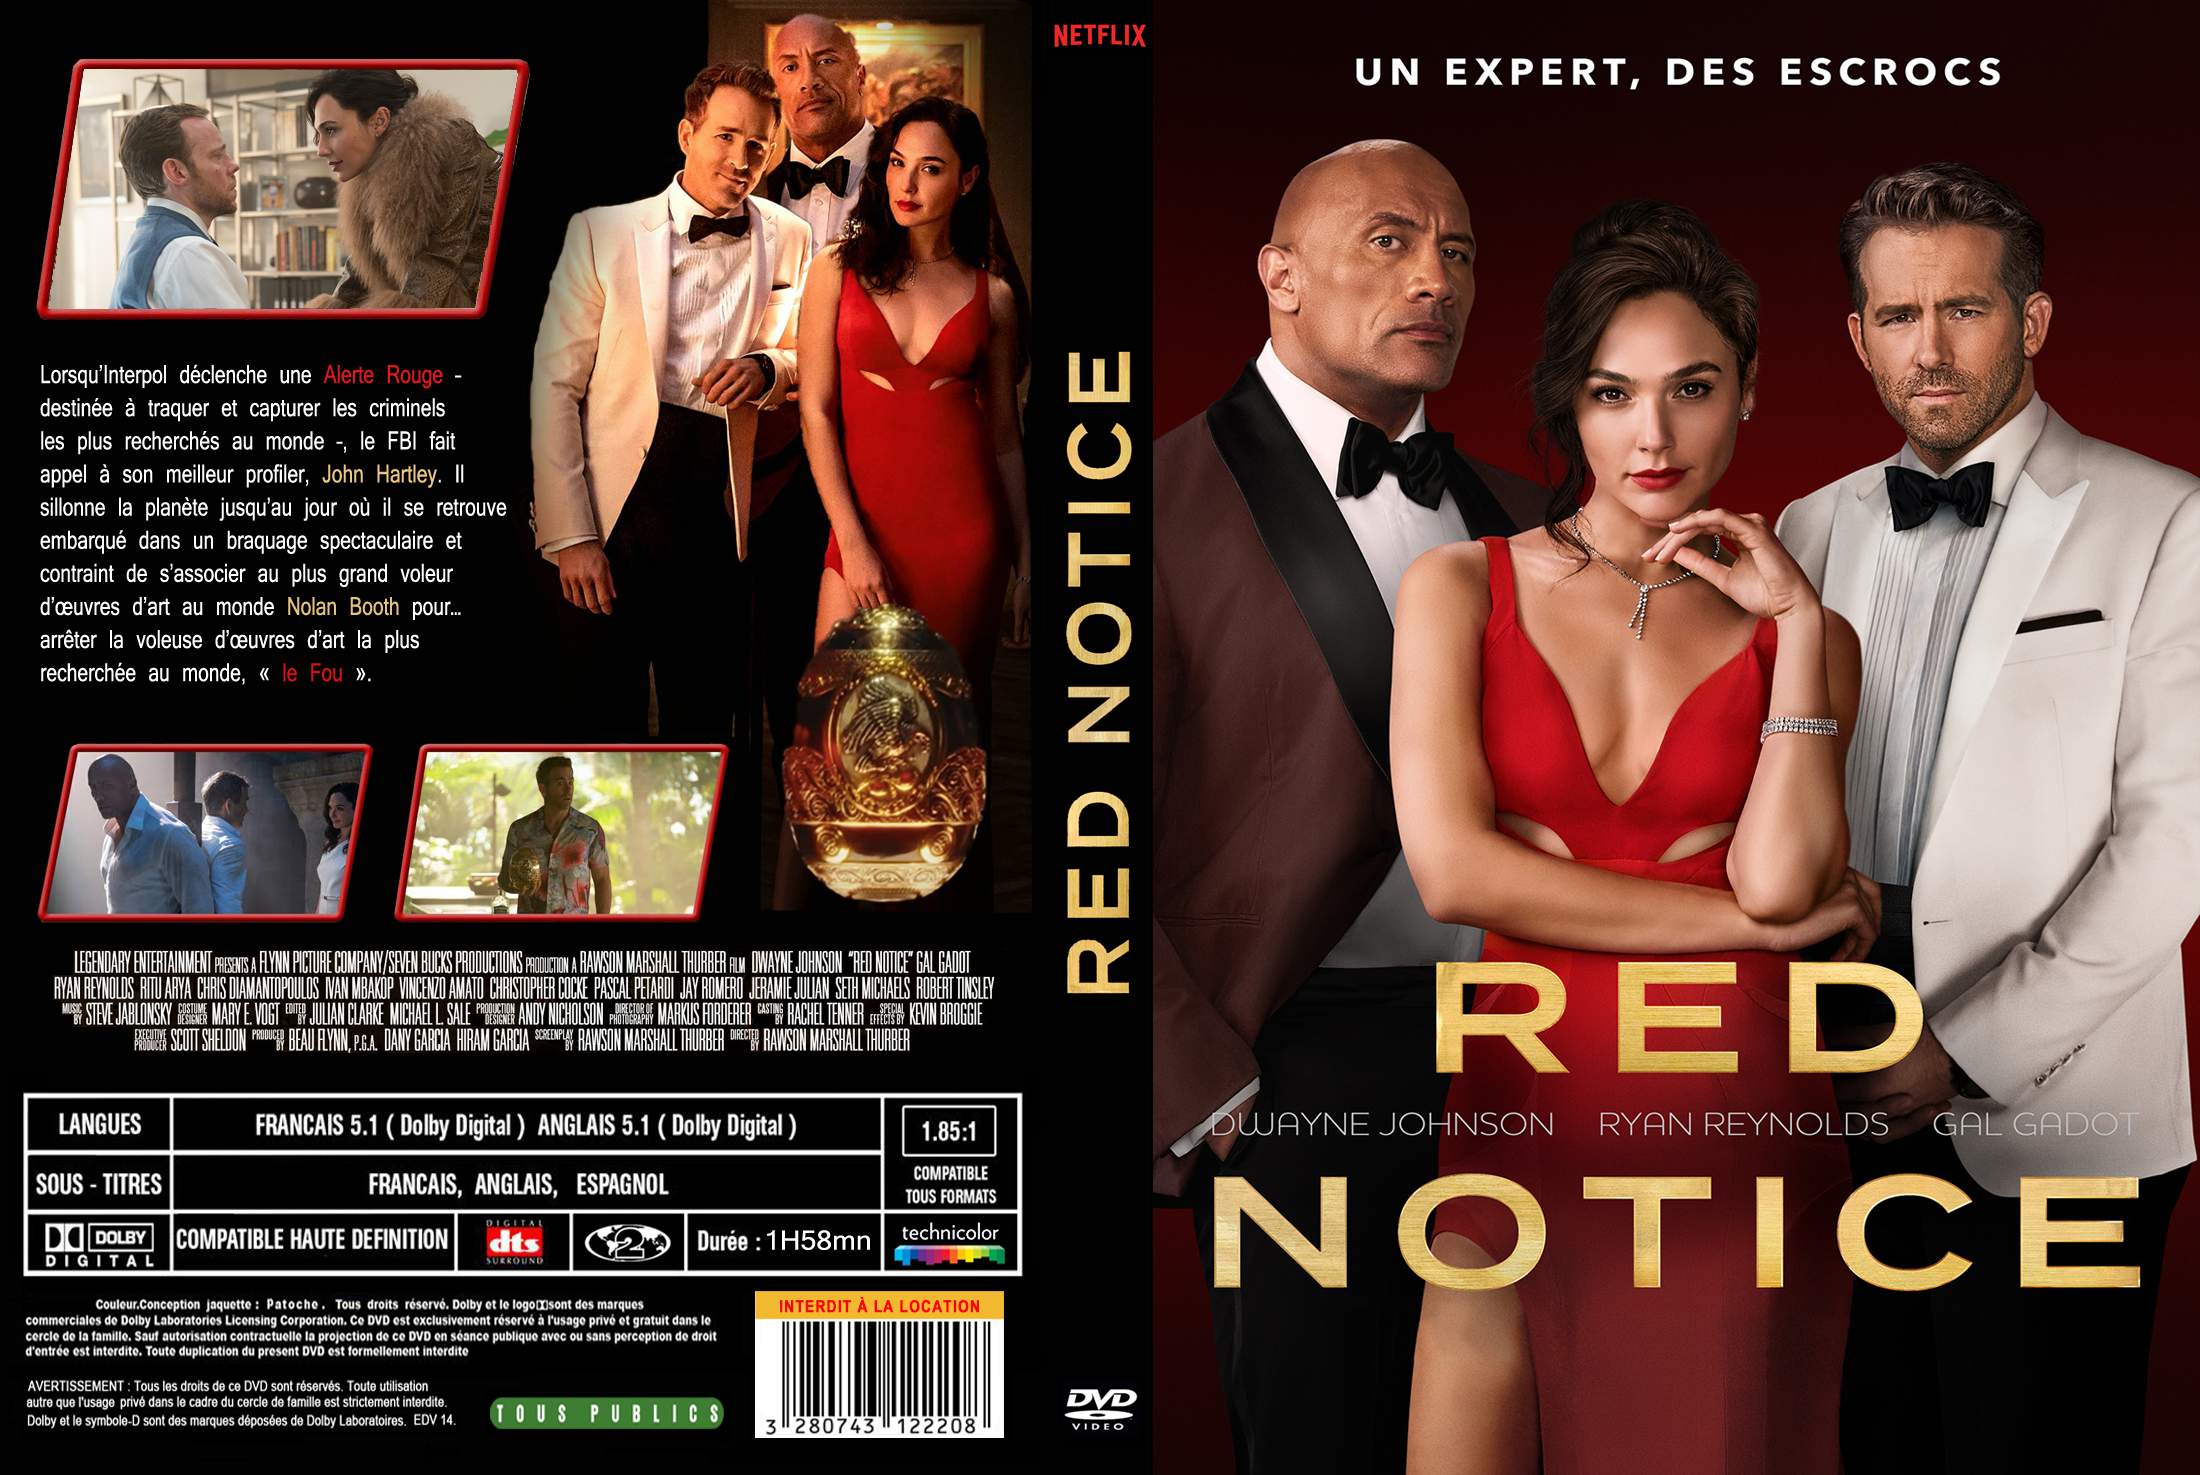 Jaquette DVD Red notice custom